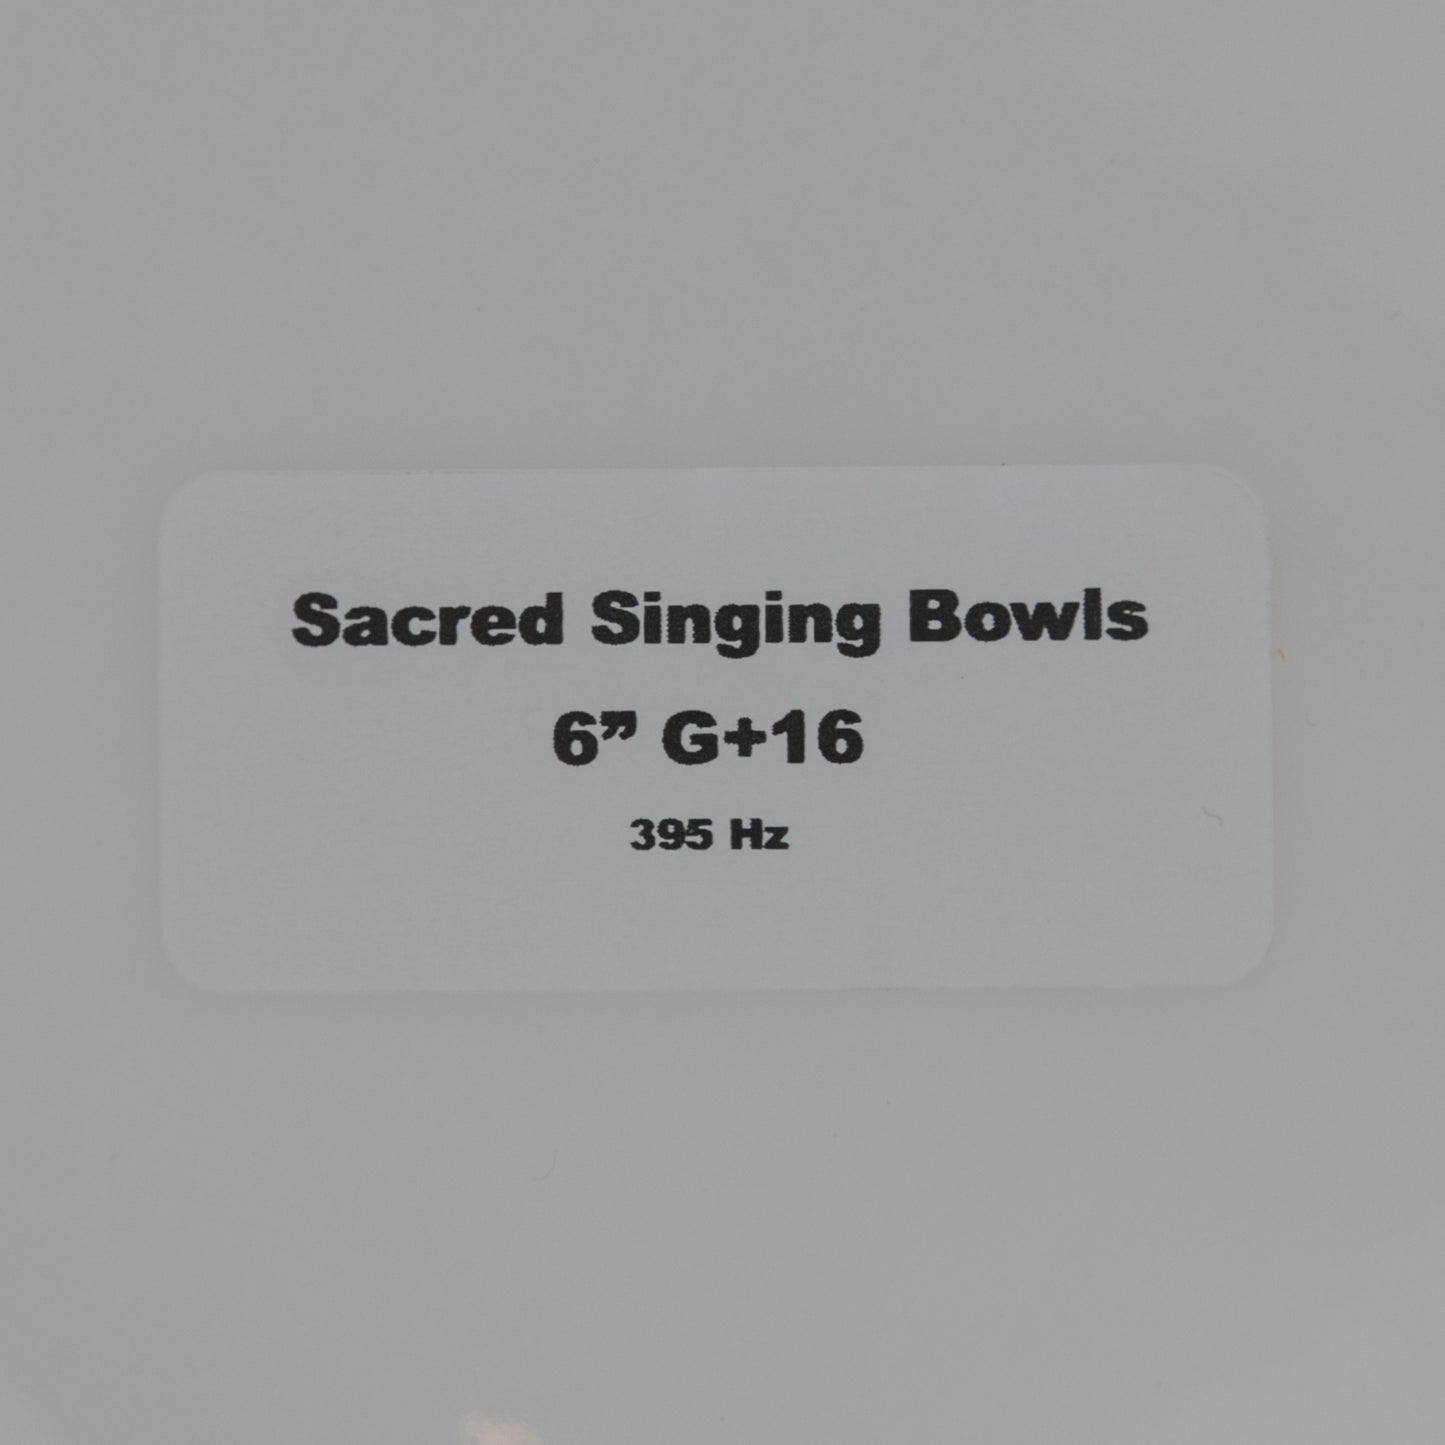 6" G+16 White Light Quartz Crystal Singing Bowl, Sacred Singing Bowls